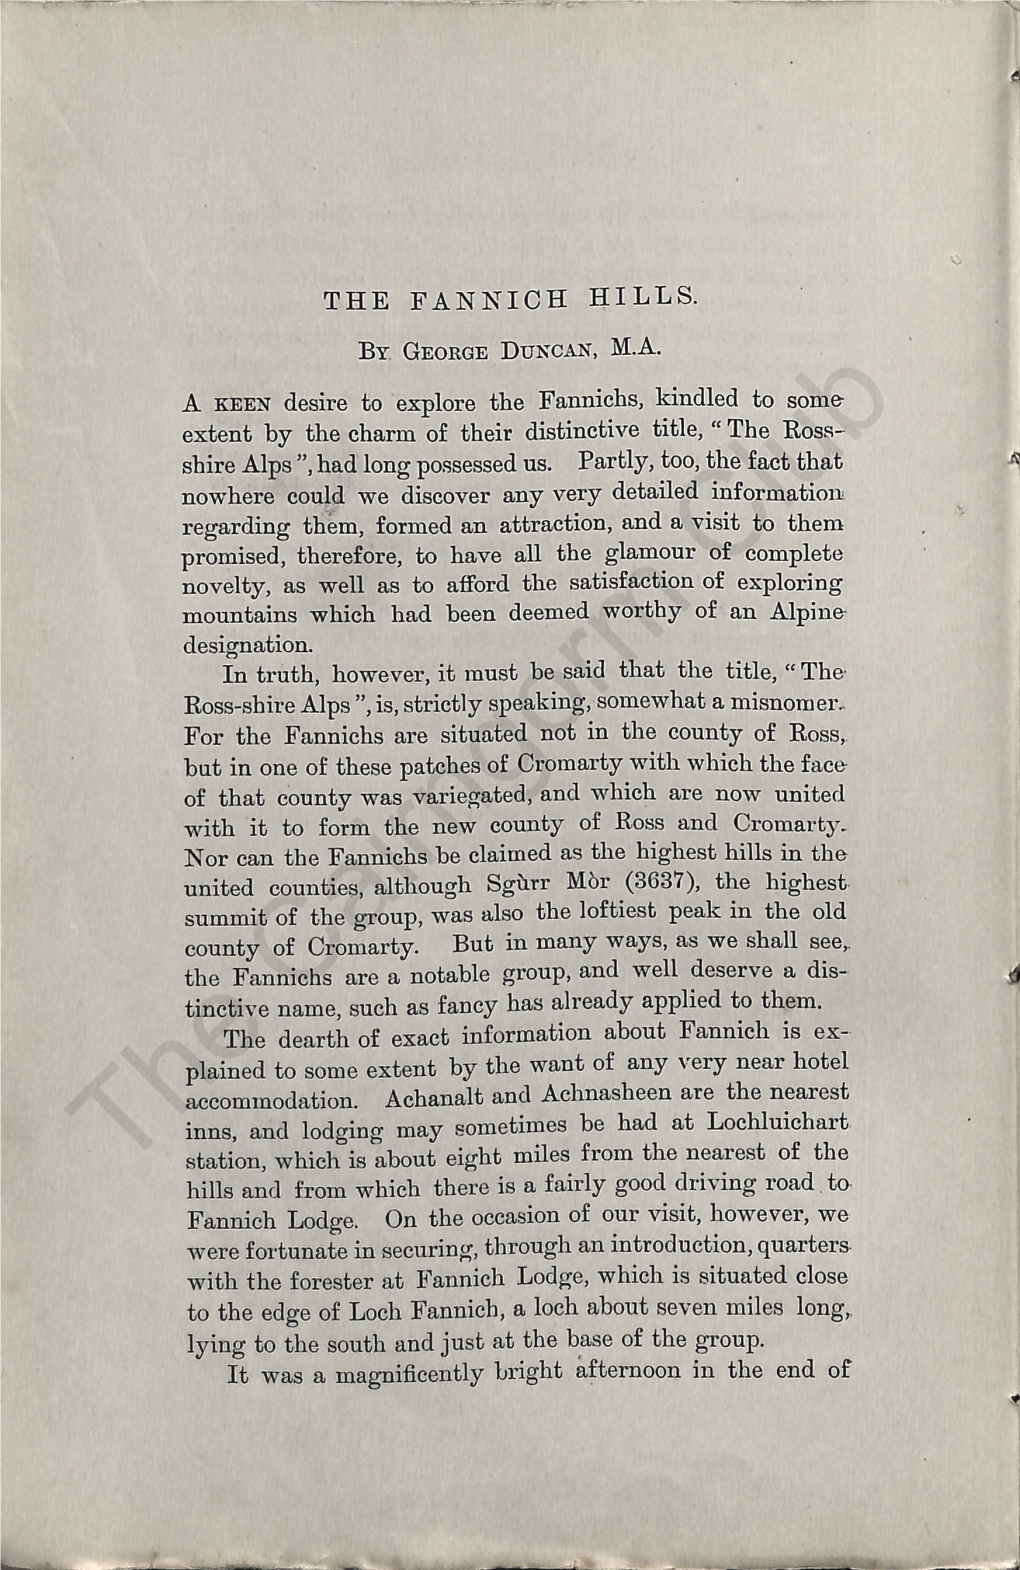 The Cairngorm Club Journal 007, 1896